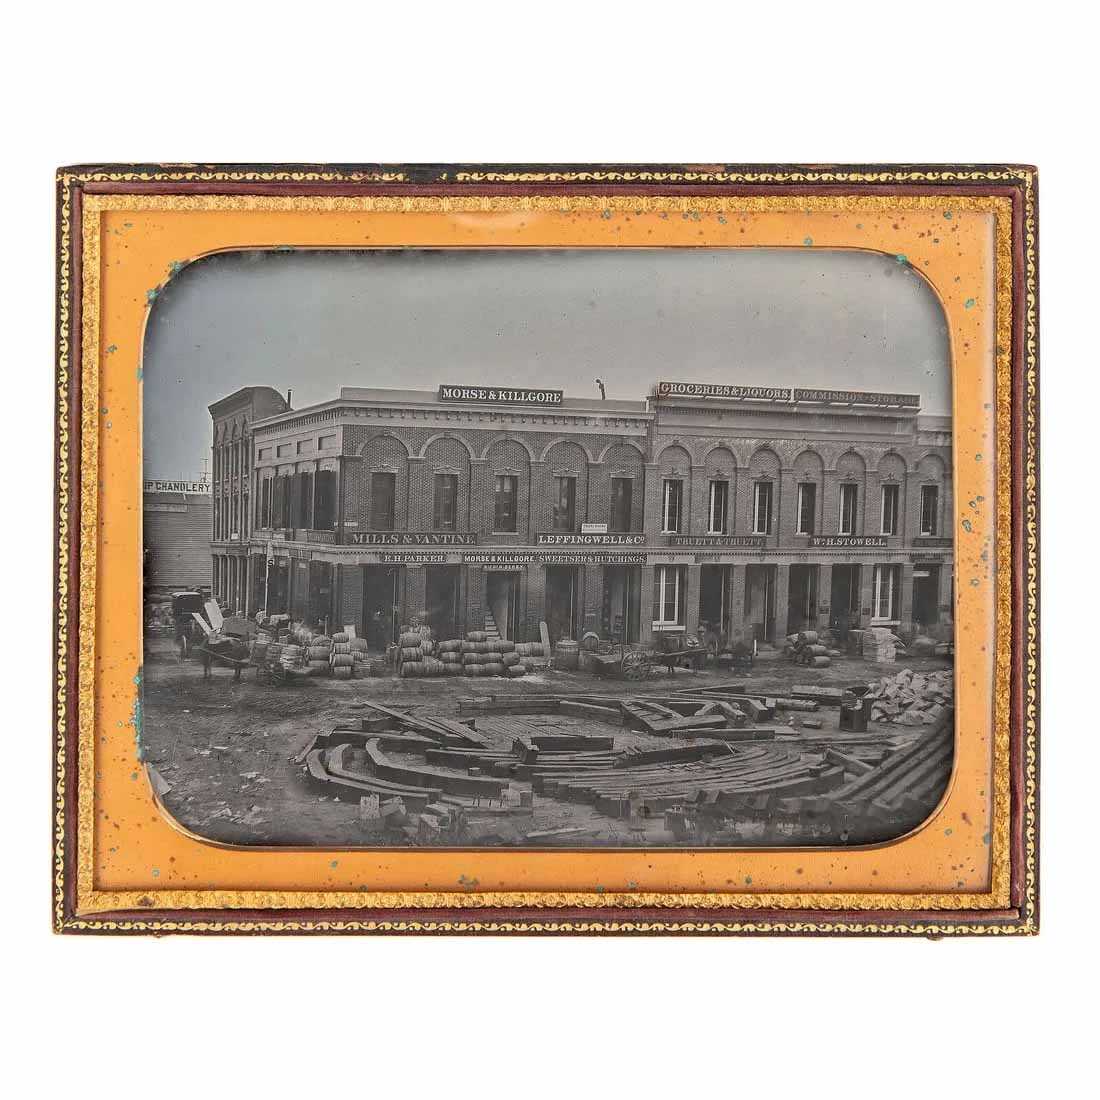 Nineteenth-century photographs of San Francisco document the impact of the California Gold Rush at Freeman&#8217;s Hindman May 31